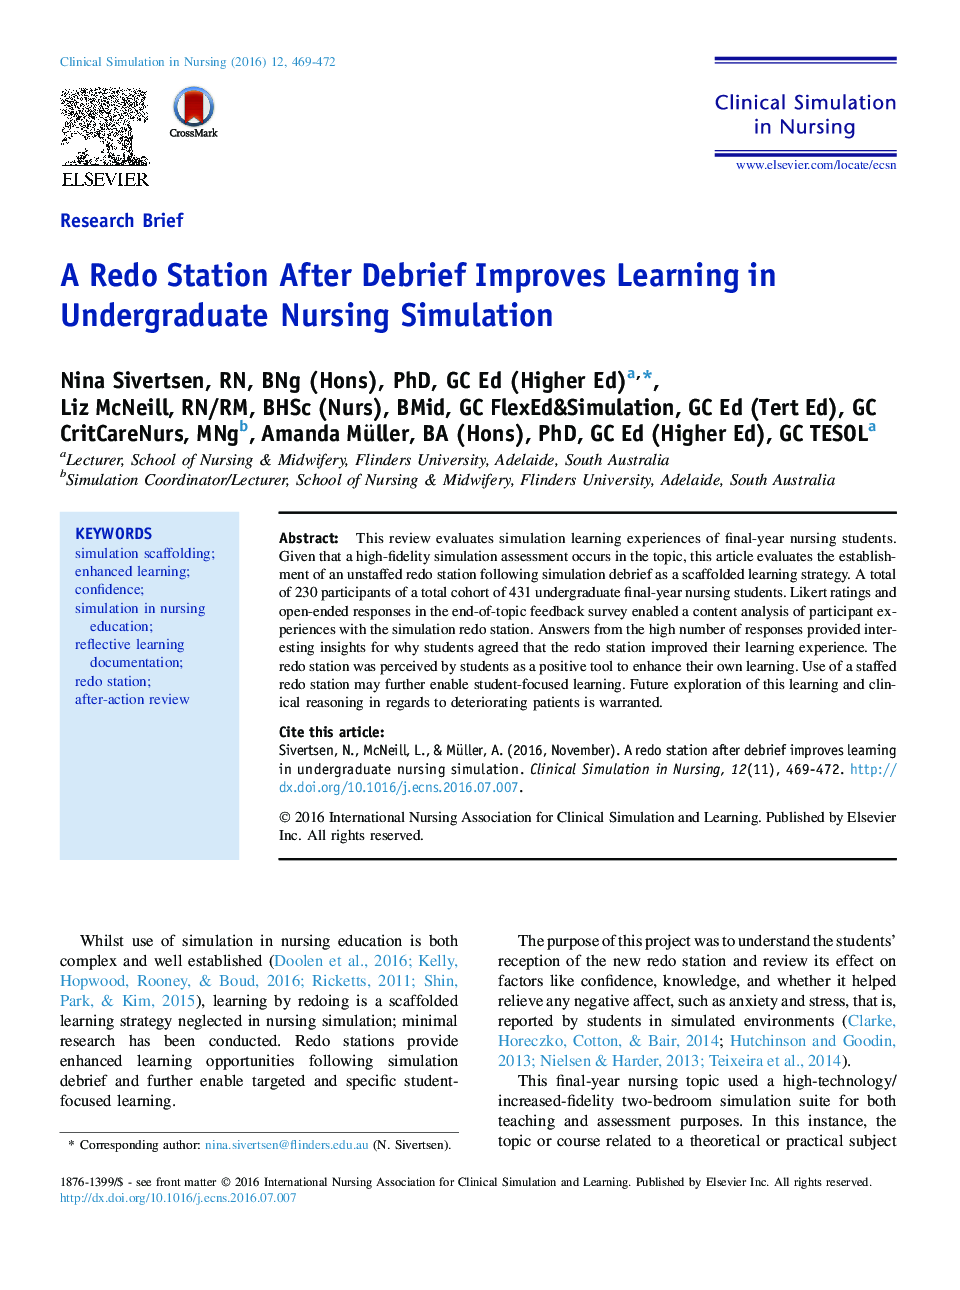 A Redo Station After Debrief Improves Learning in Undergraduate Nursing Simulation